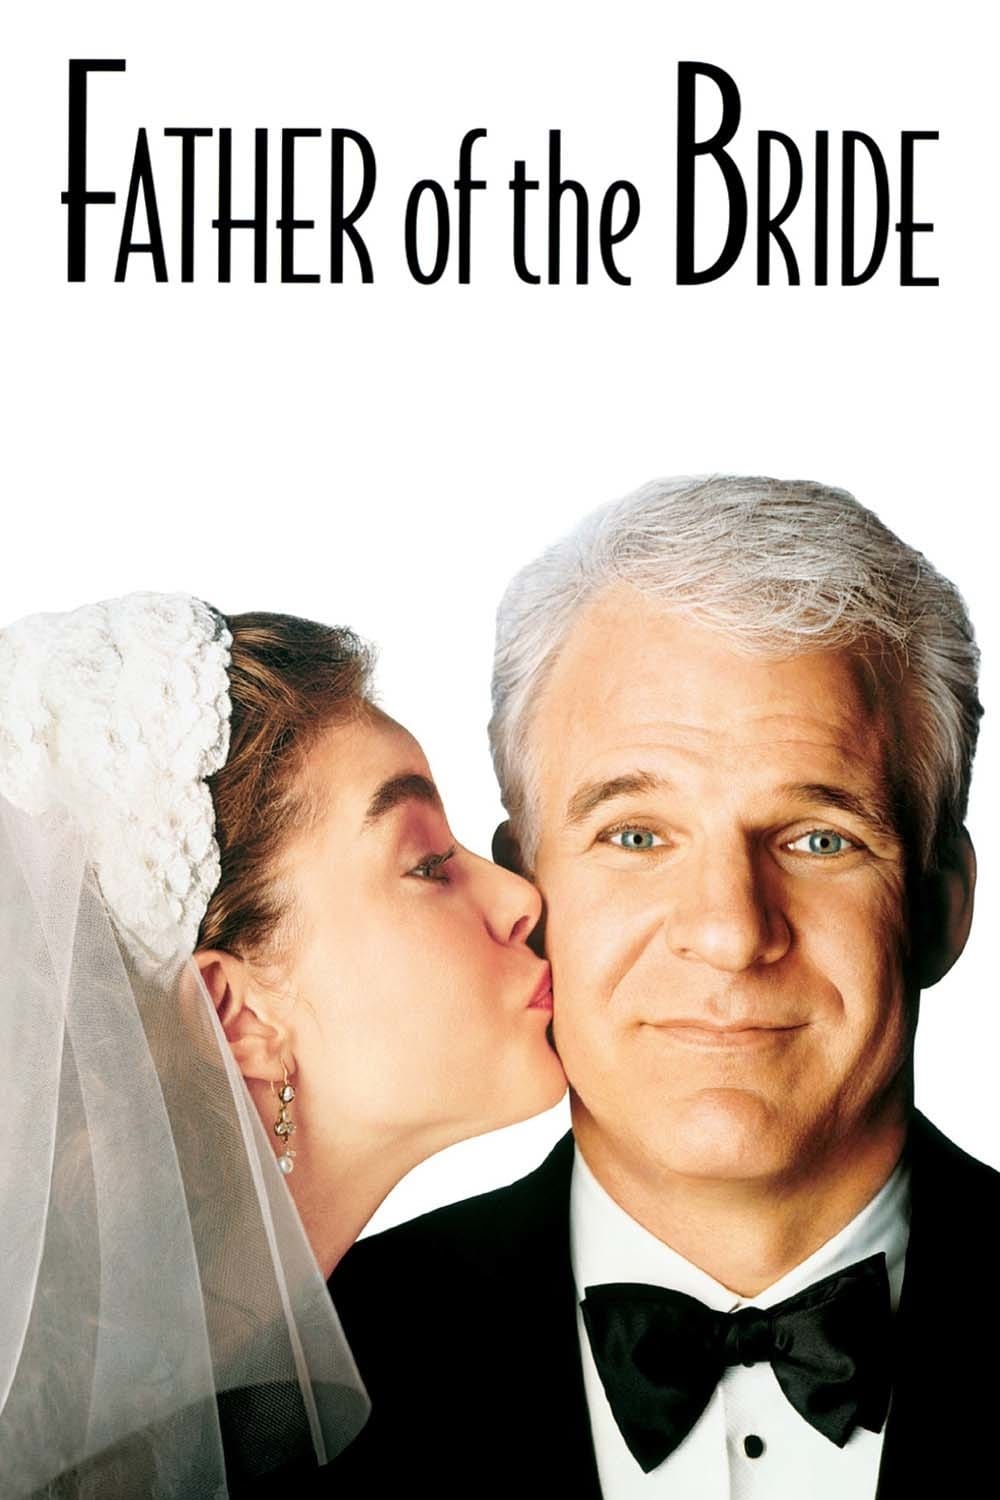 The Bride [DVD]